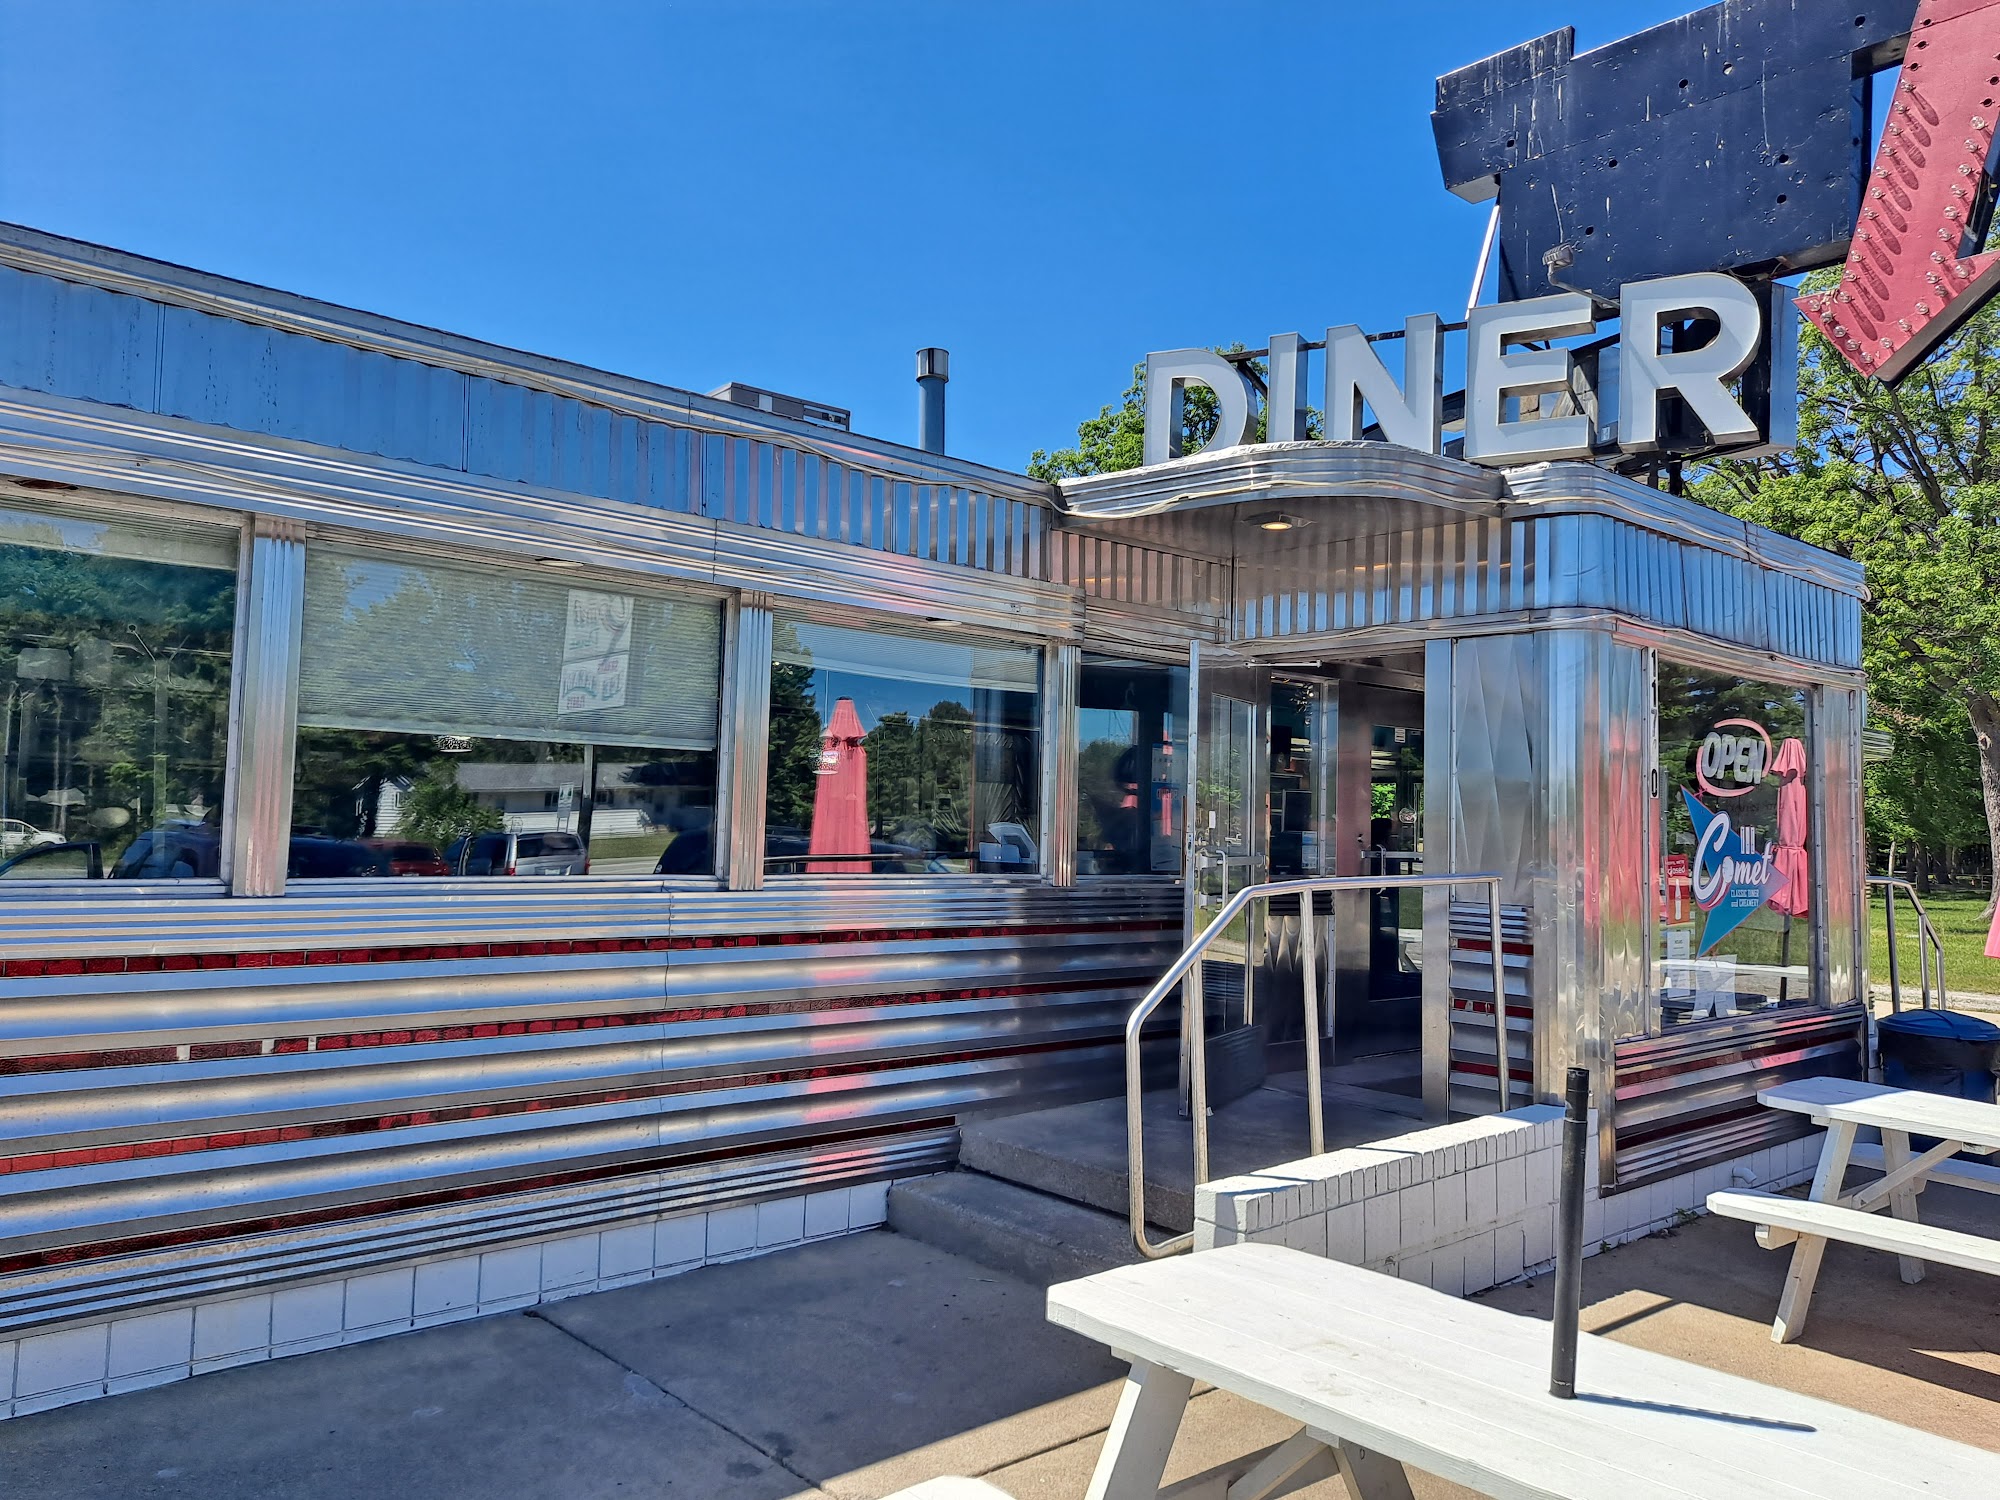 The Comet Classic Diner & Creamery